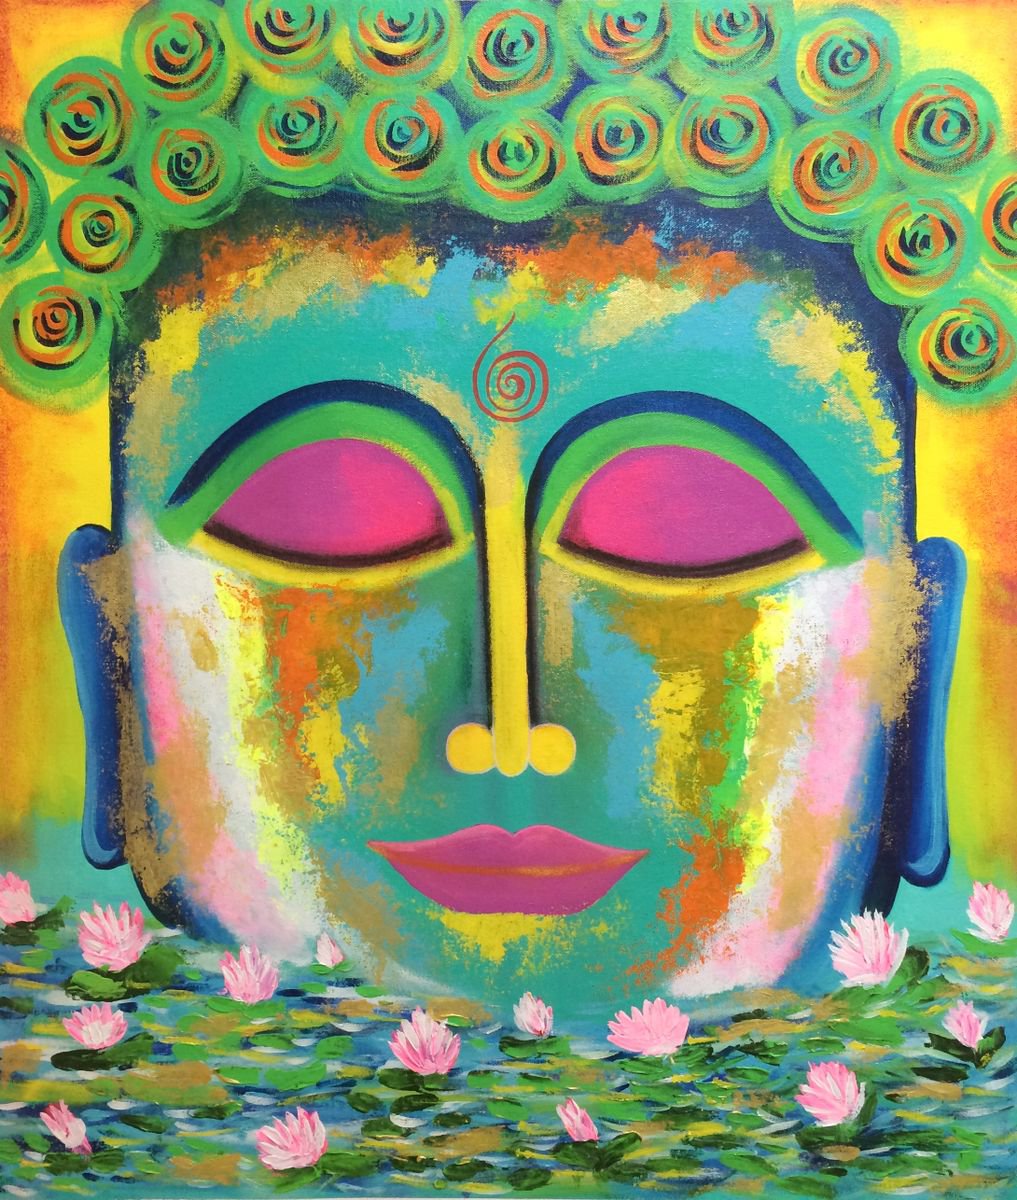 Rising Lord Buddha !! by Amita Dand